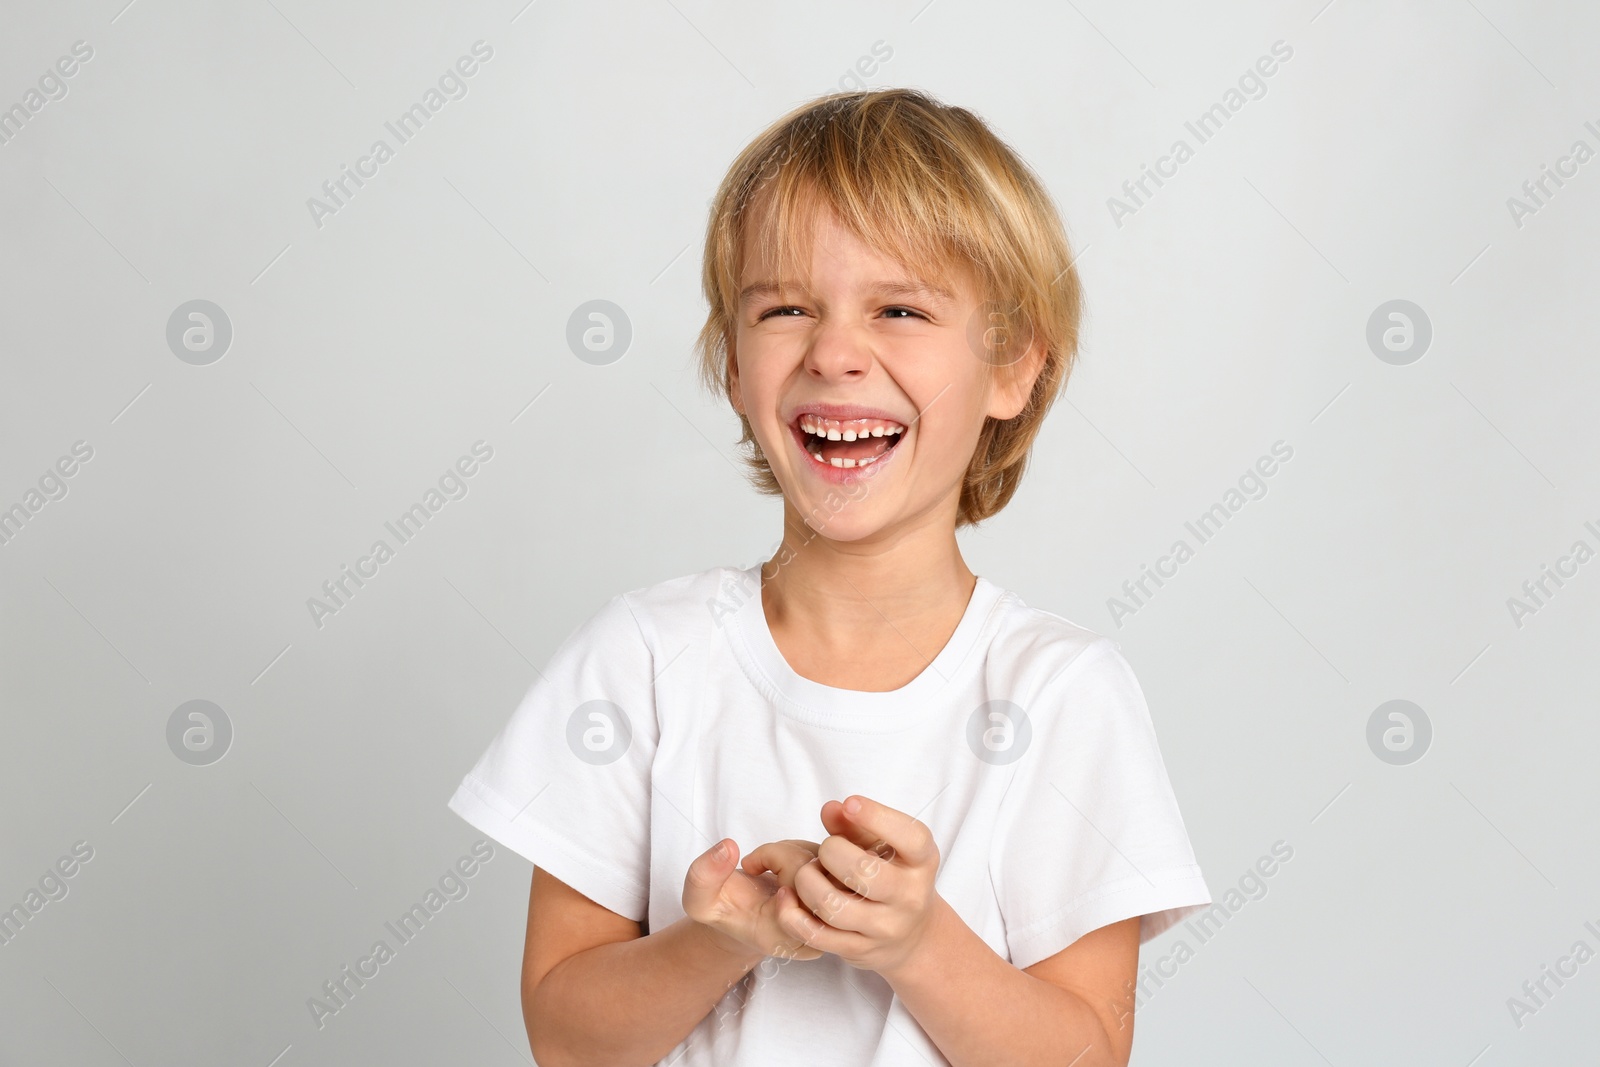 Photo of Happy little boy on light grey background